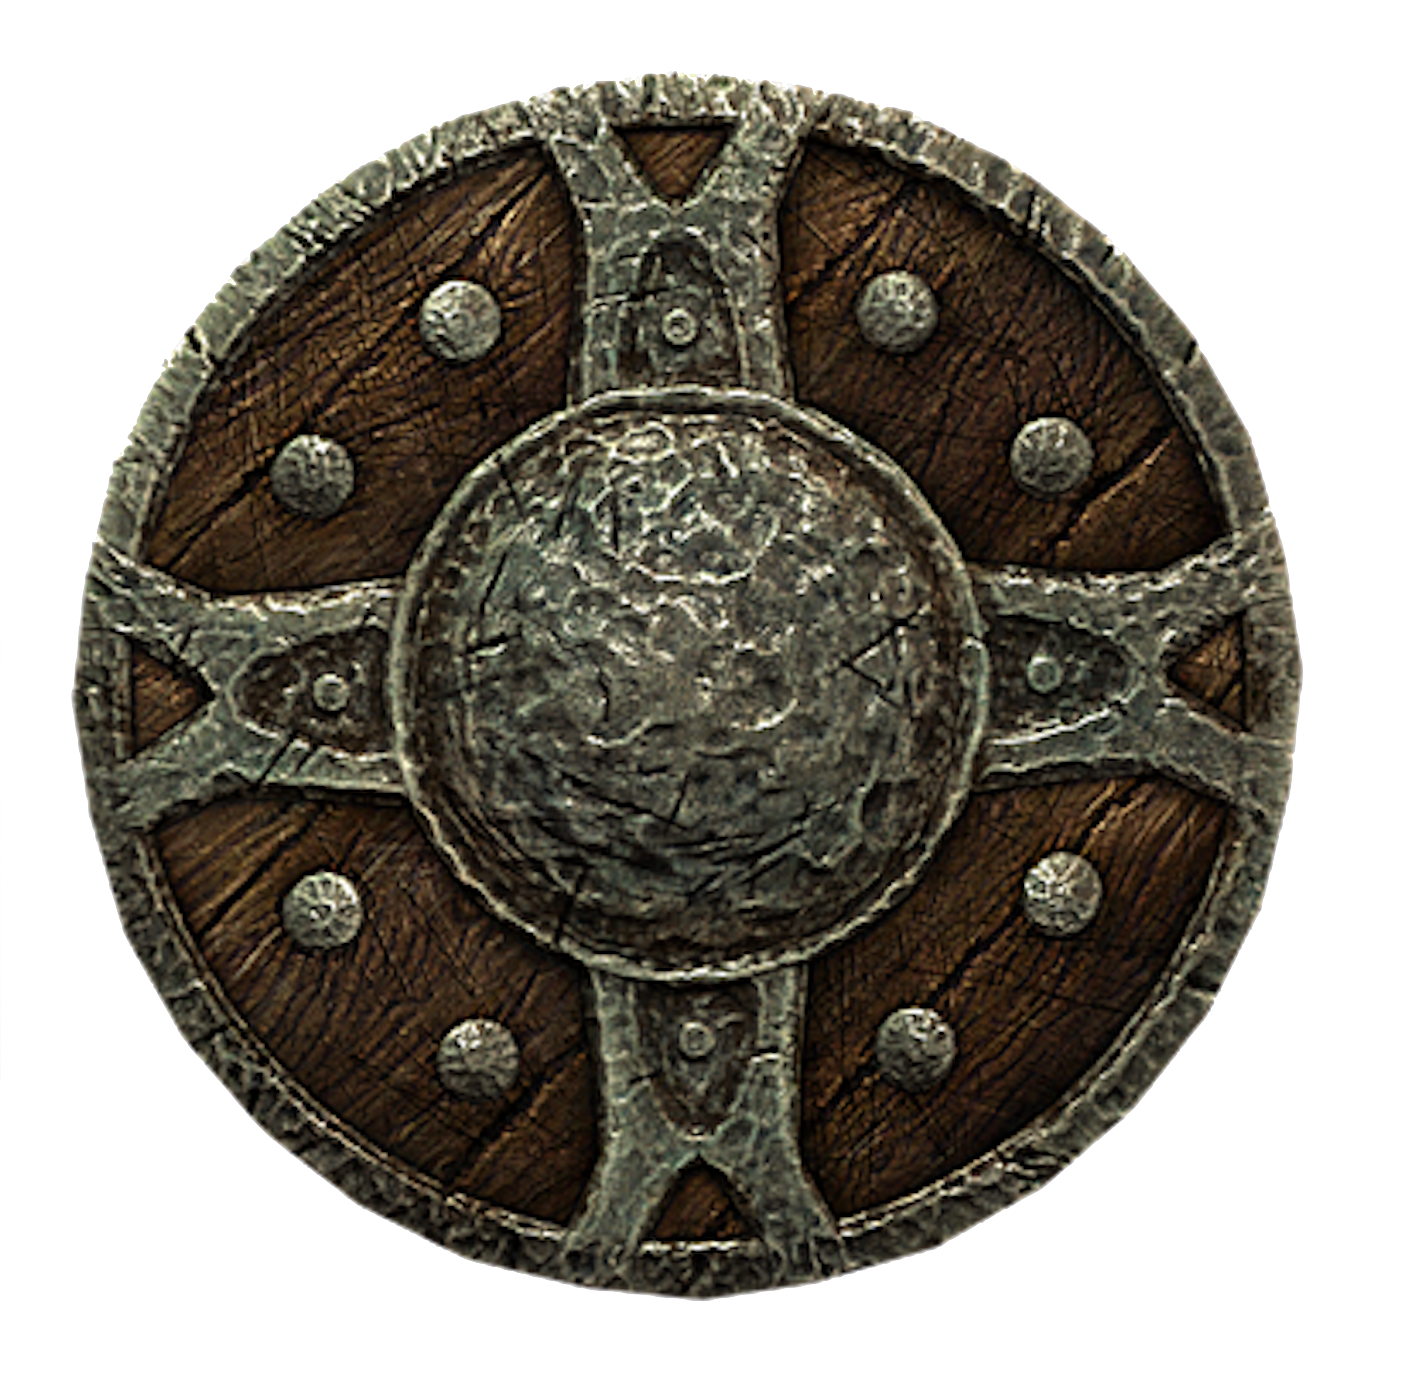 Medieval Shield